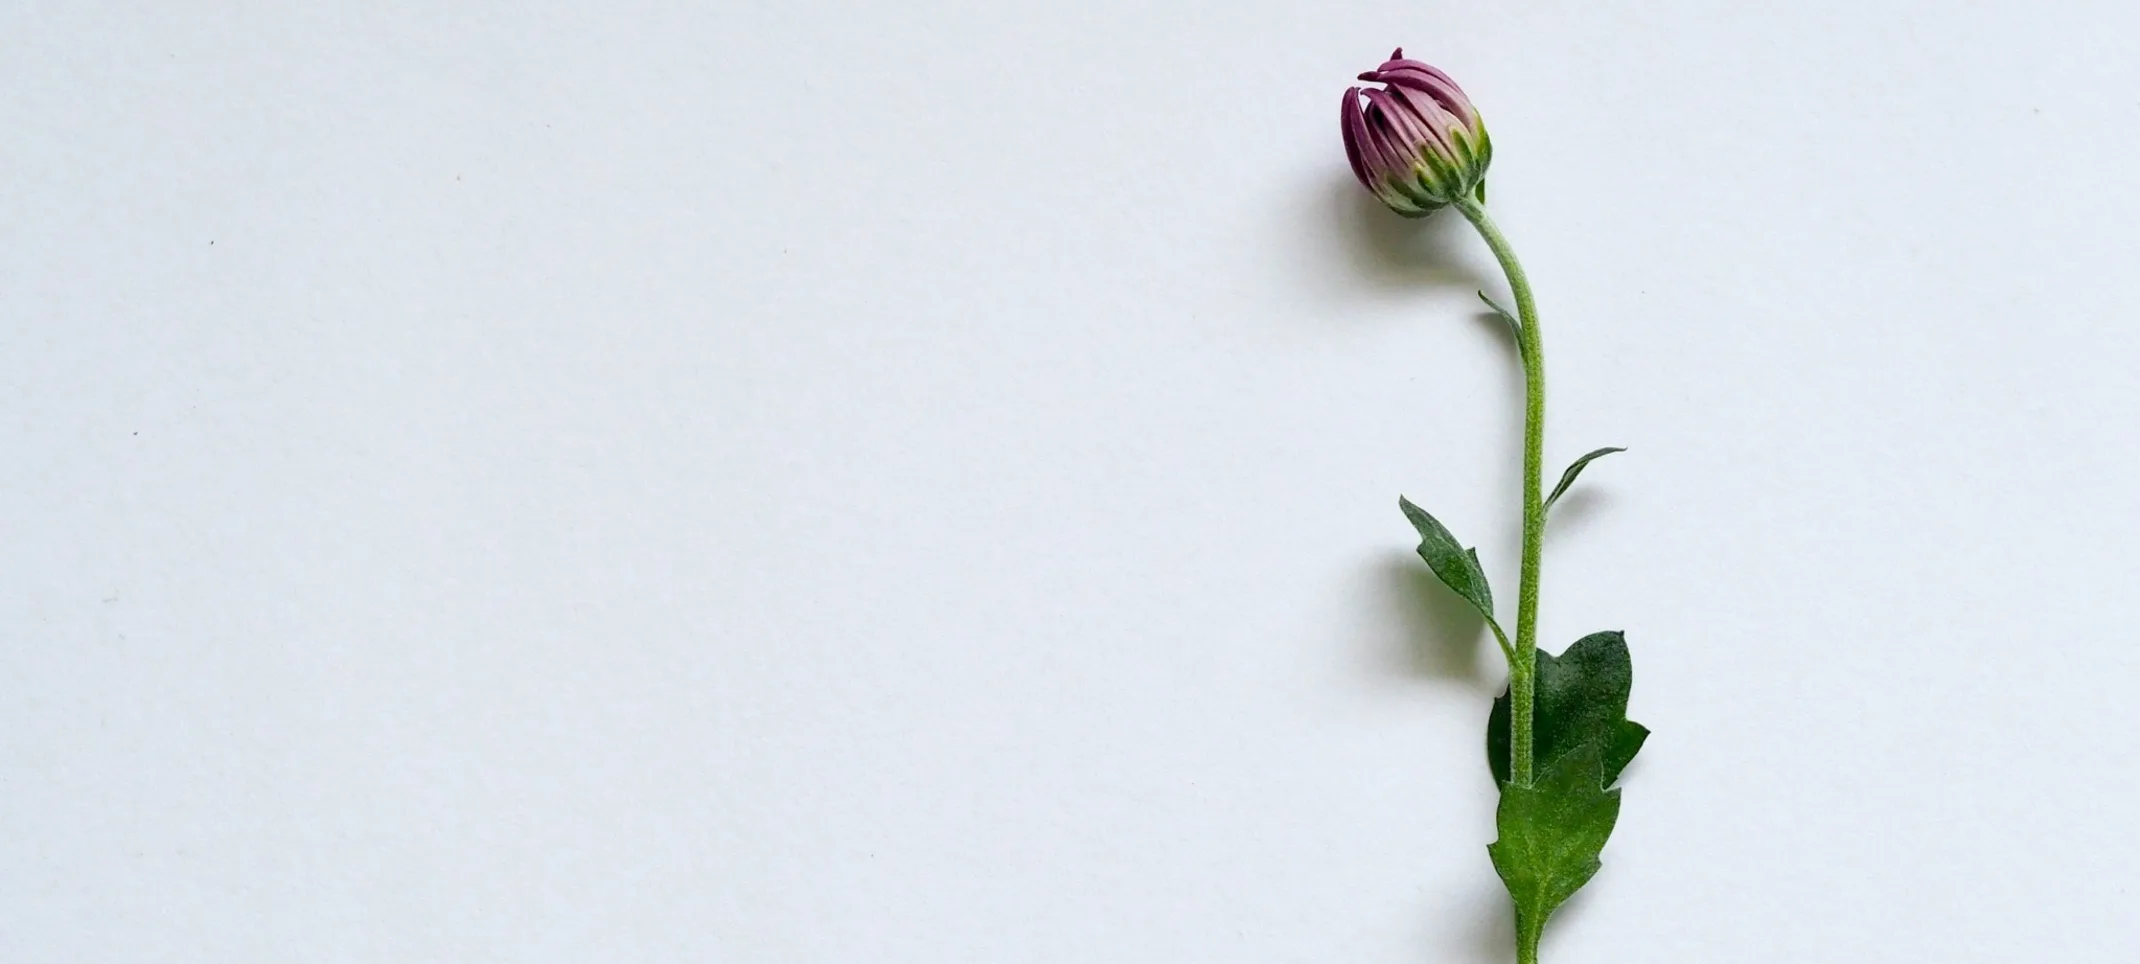 A single budding flower set against a light gray background